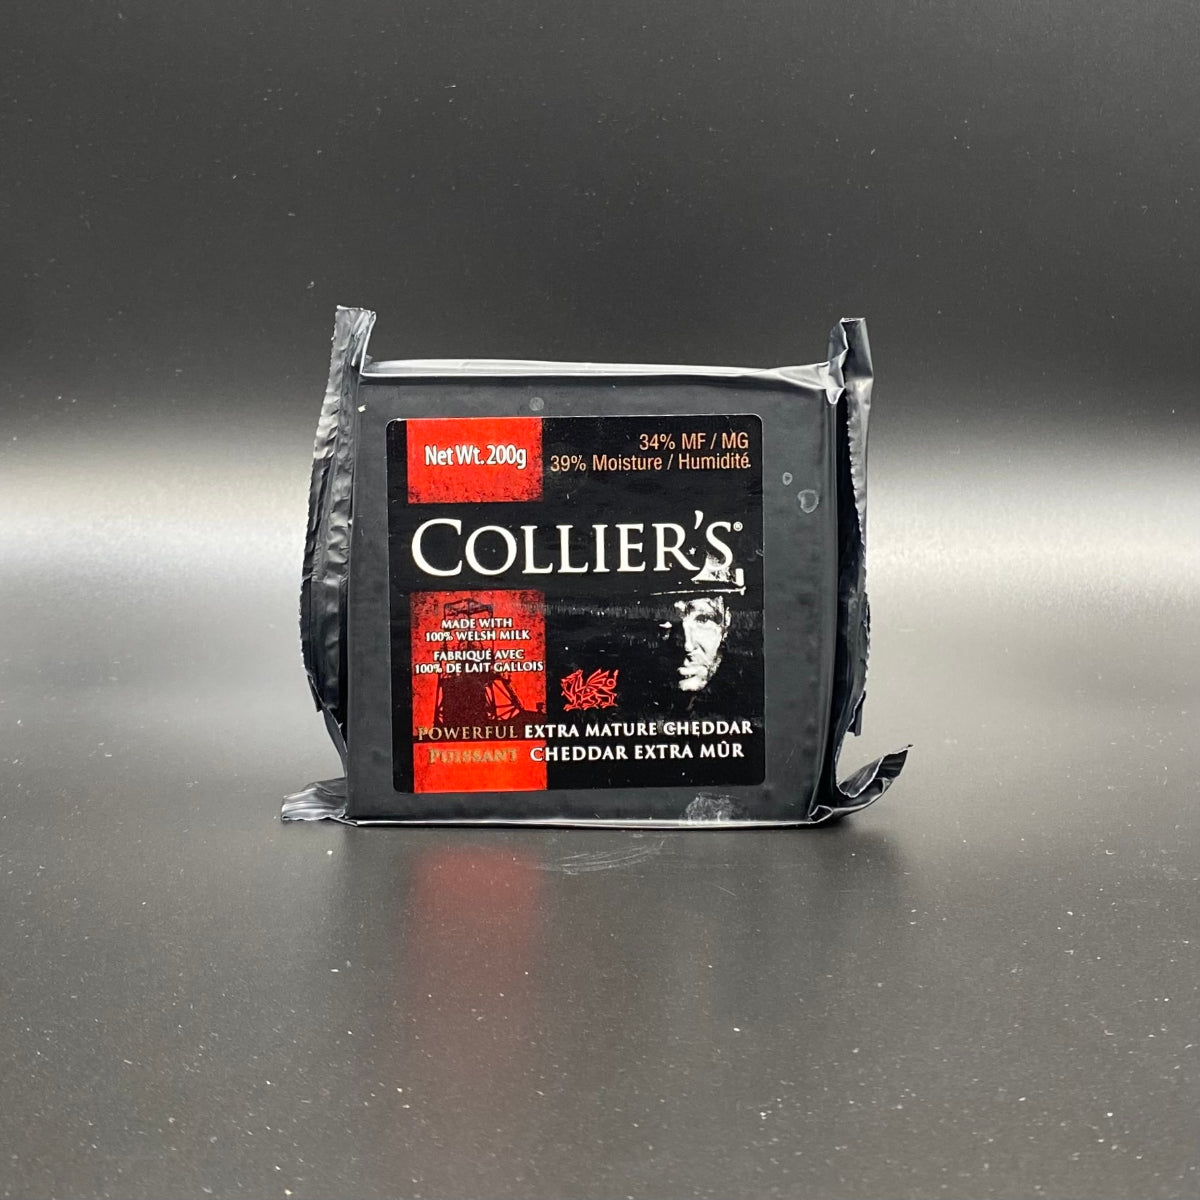 Collier's Cheddar gallois vieilli